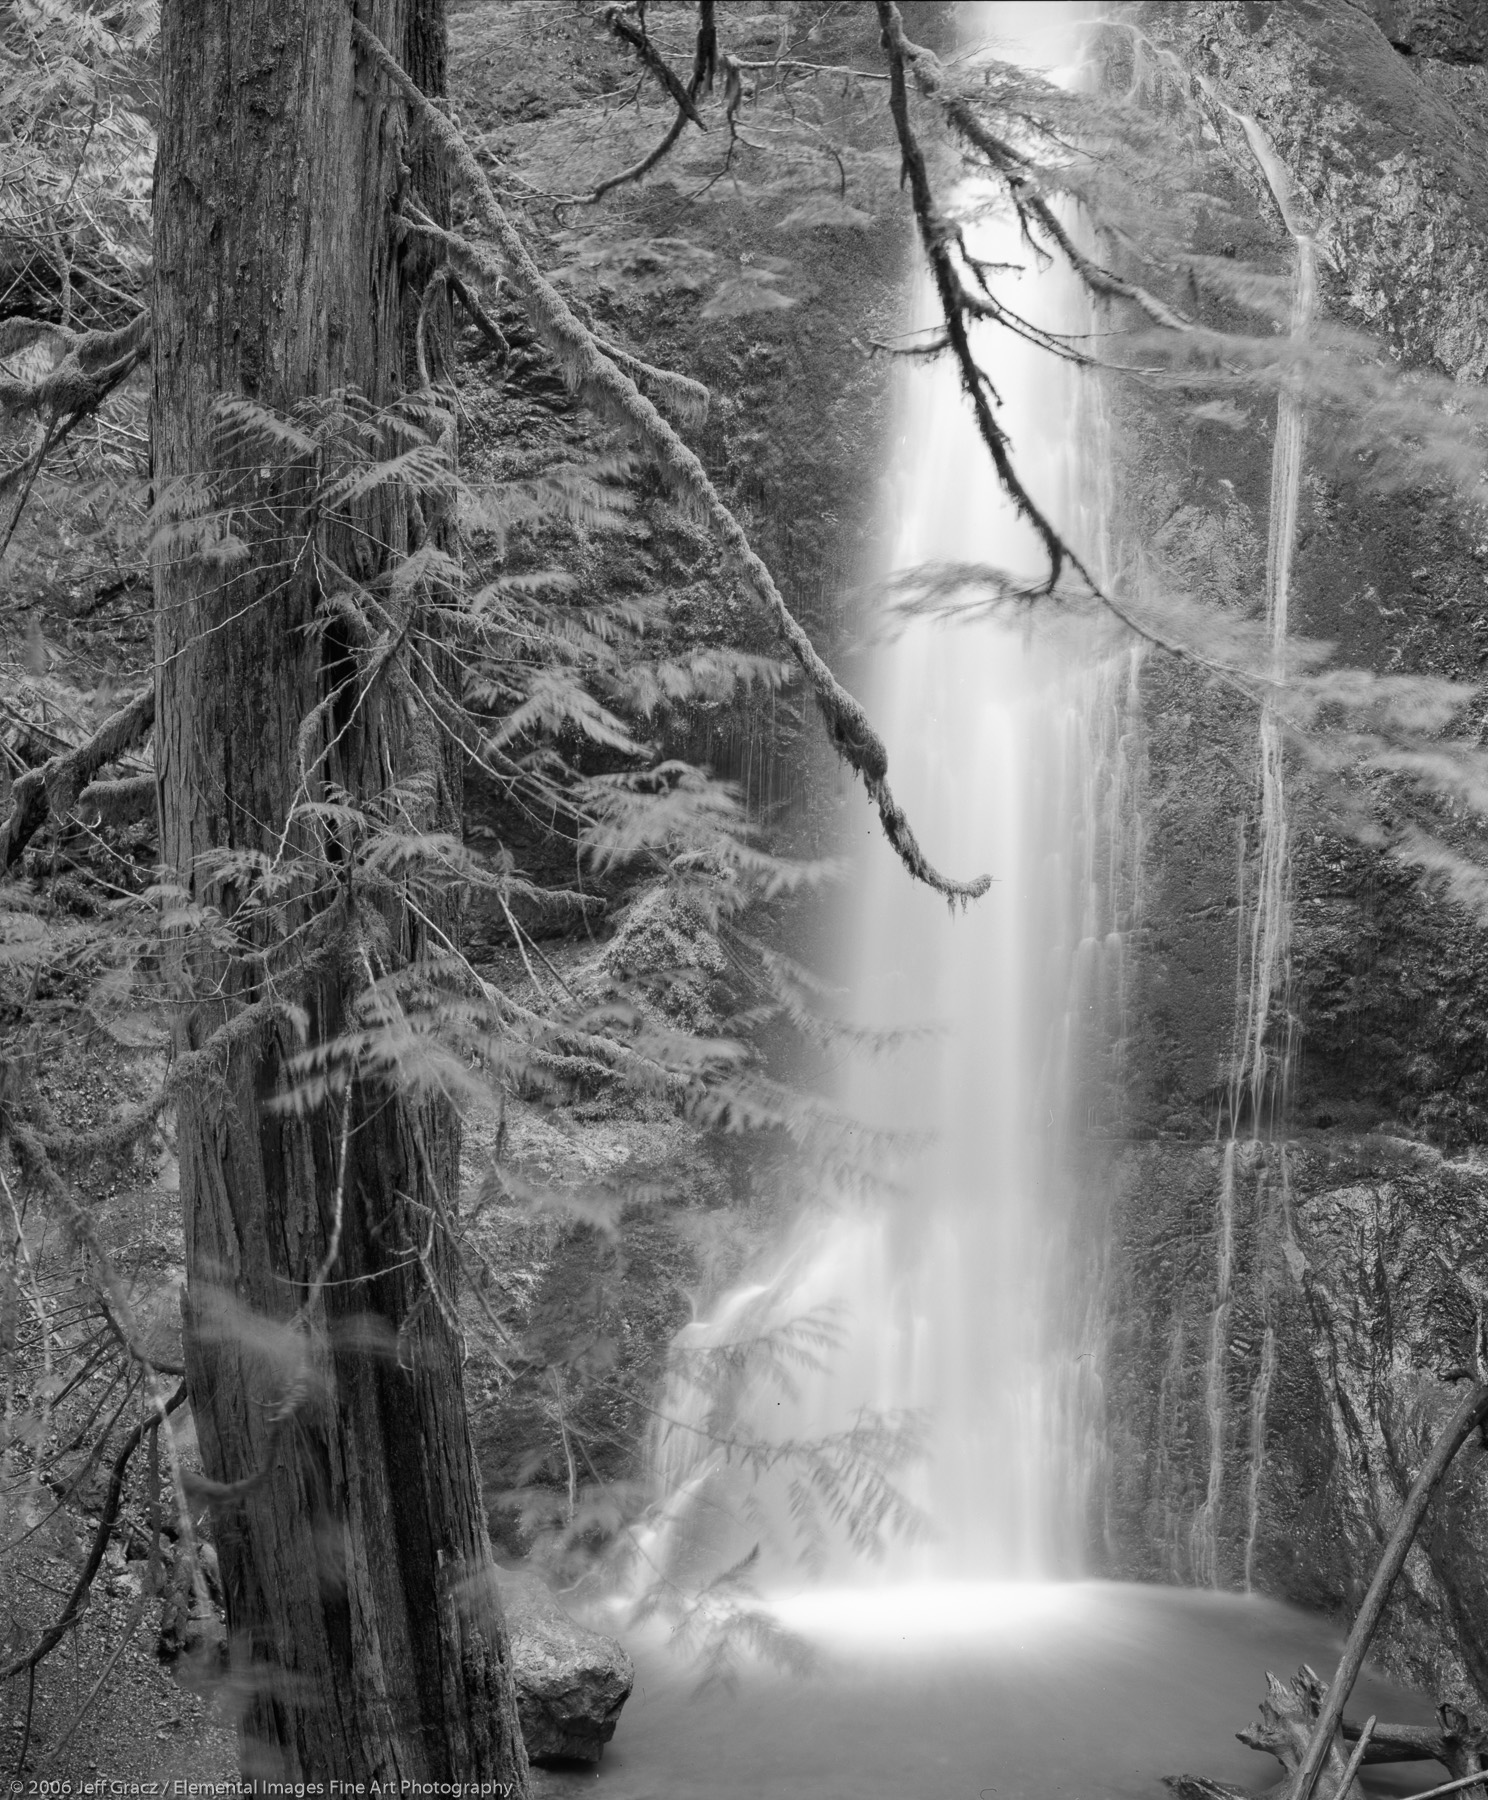 marymere falls |  | WA | usa - © © 2006 Jeff Gracz / Elemental Images Fine Art Photography - All Rights Reserved Worldwide